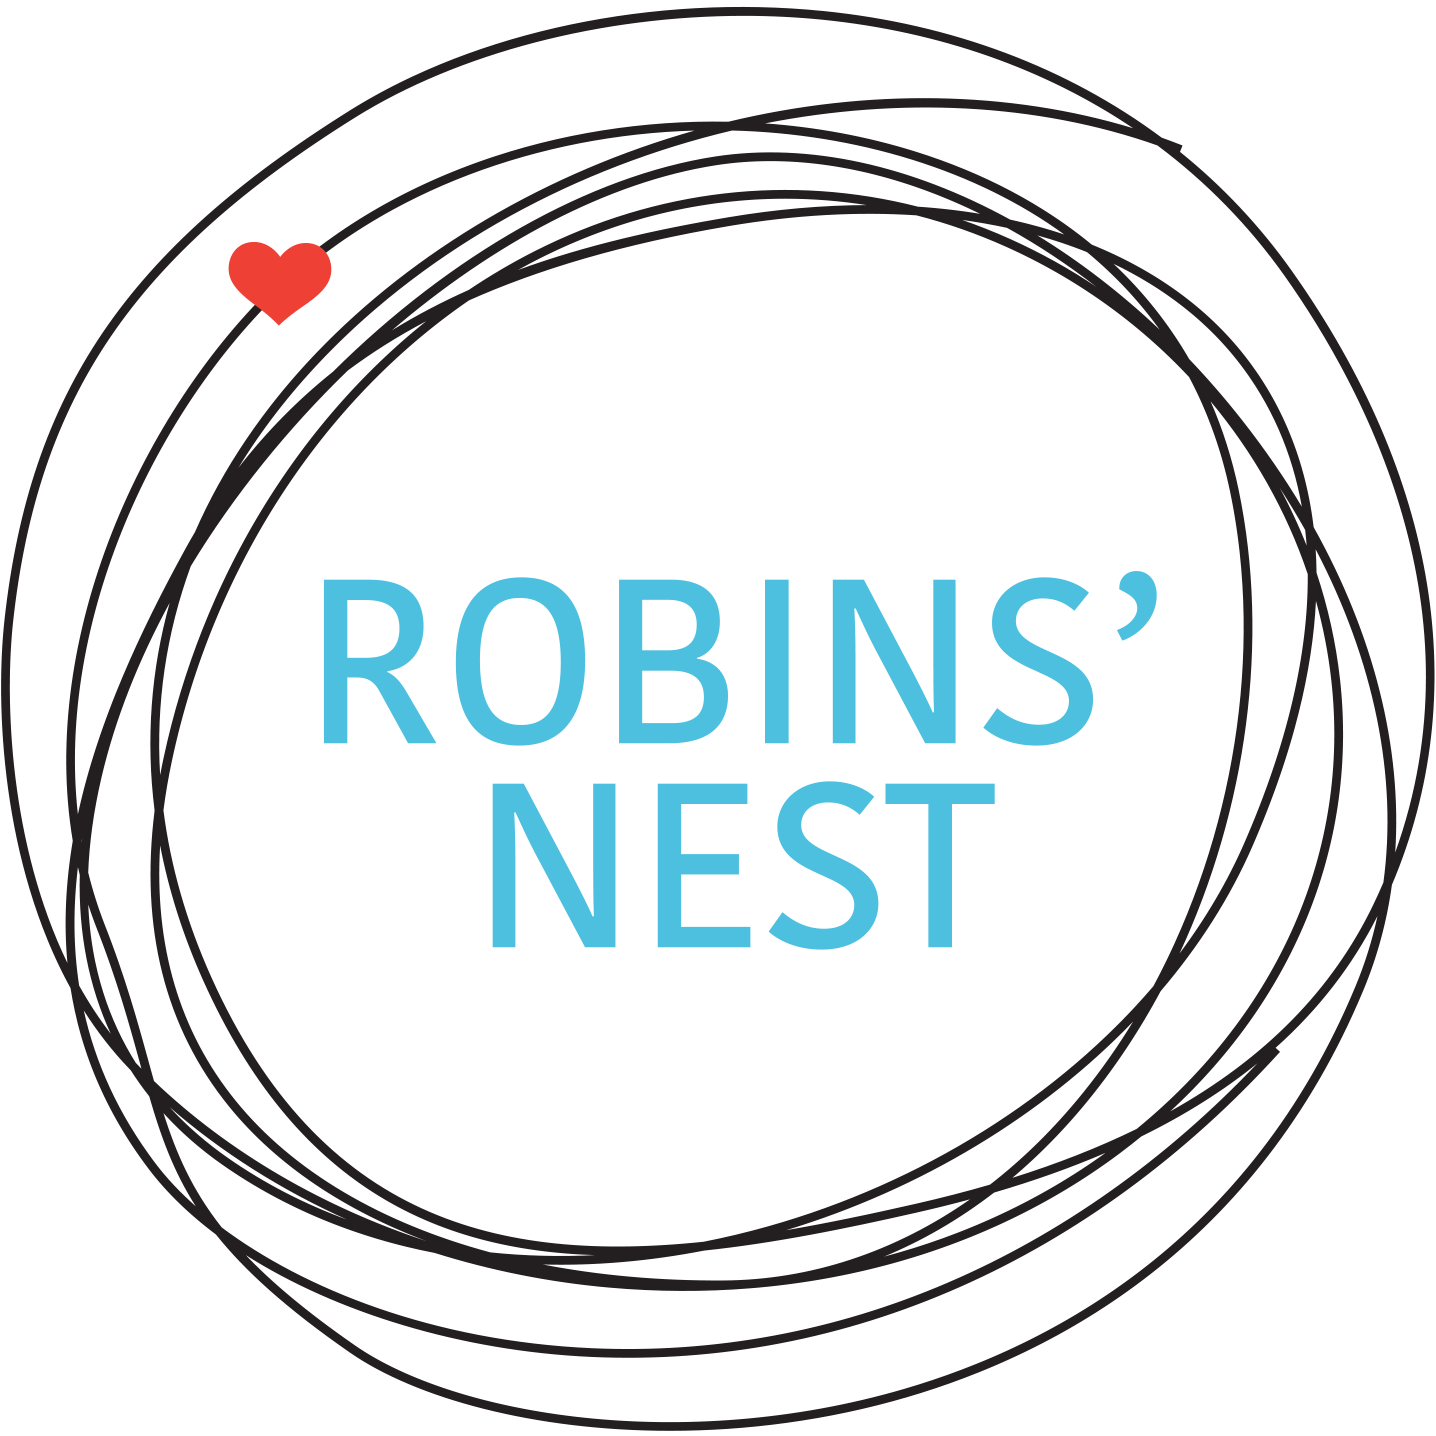 Robin's Nest Logo - Robins' Nest Inc.